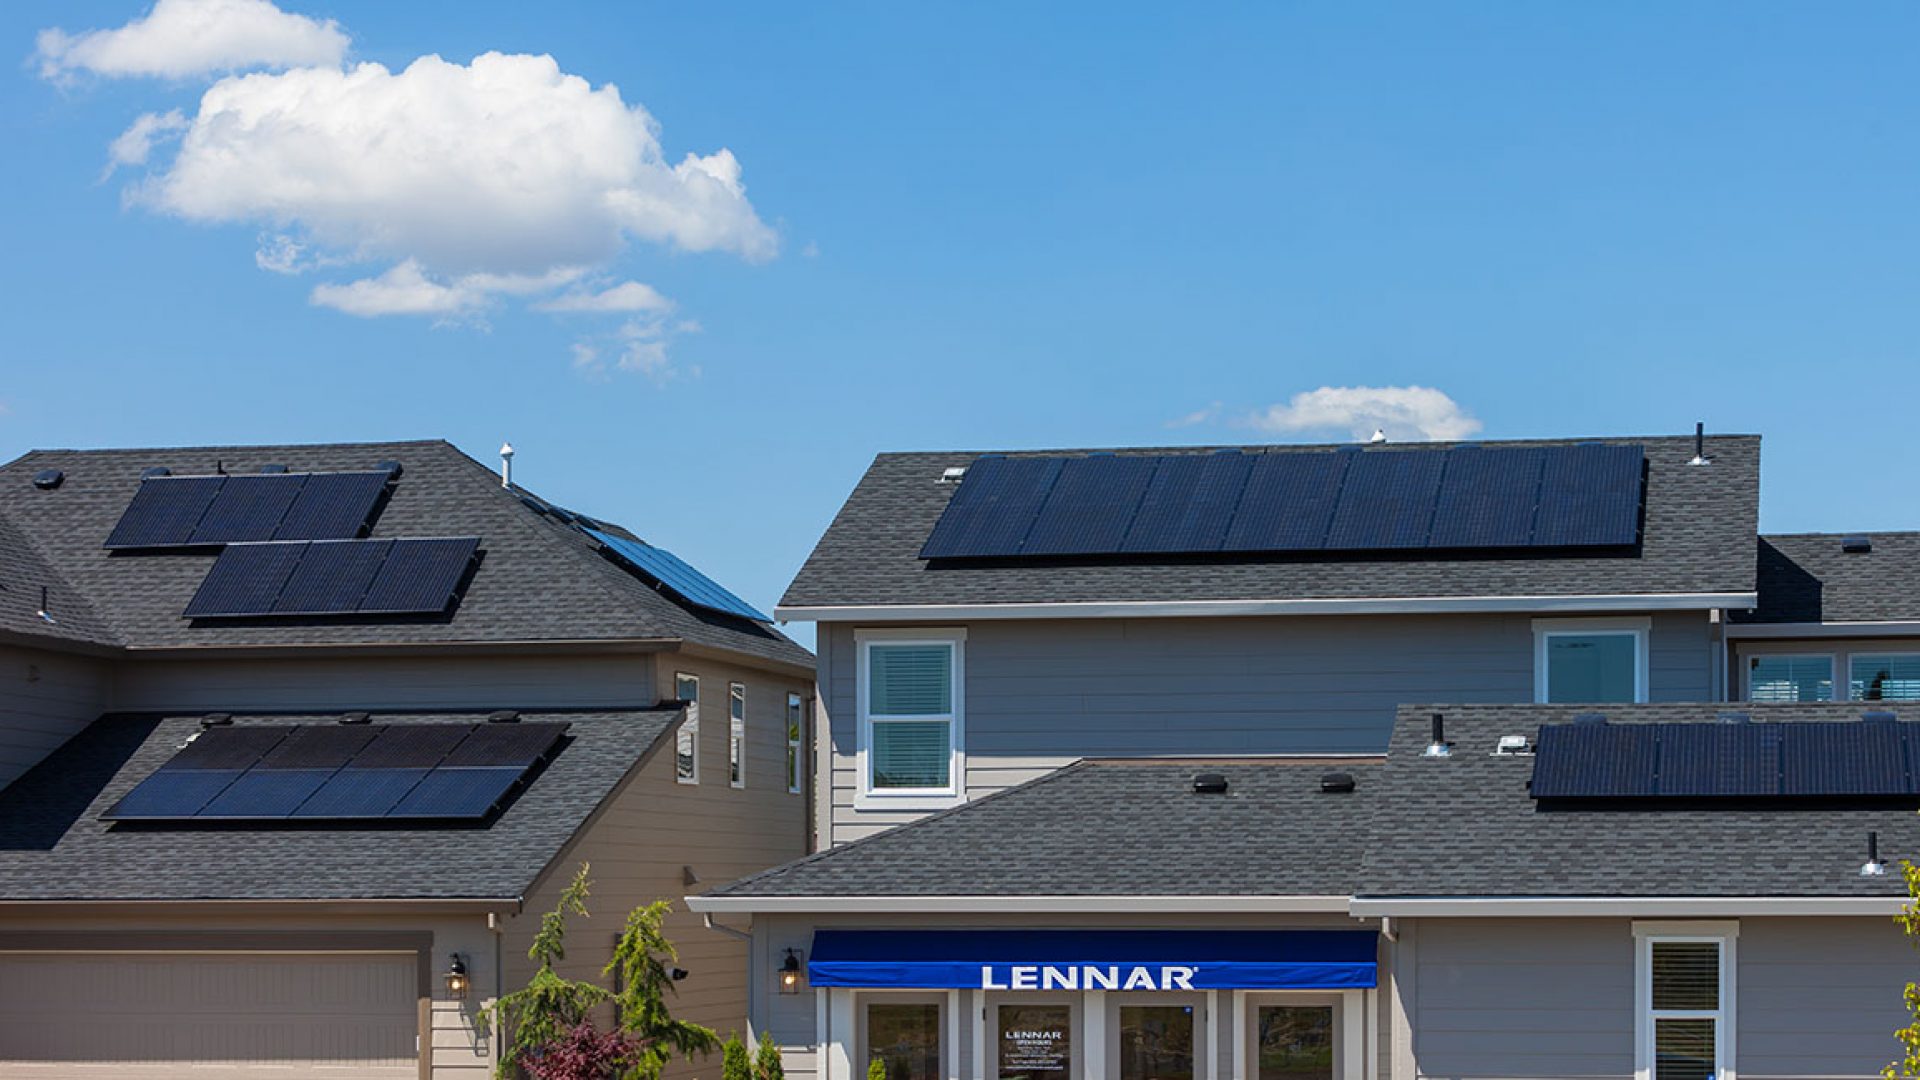 Laurel Oaks solar panels